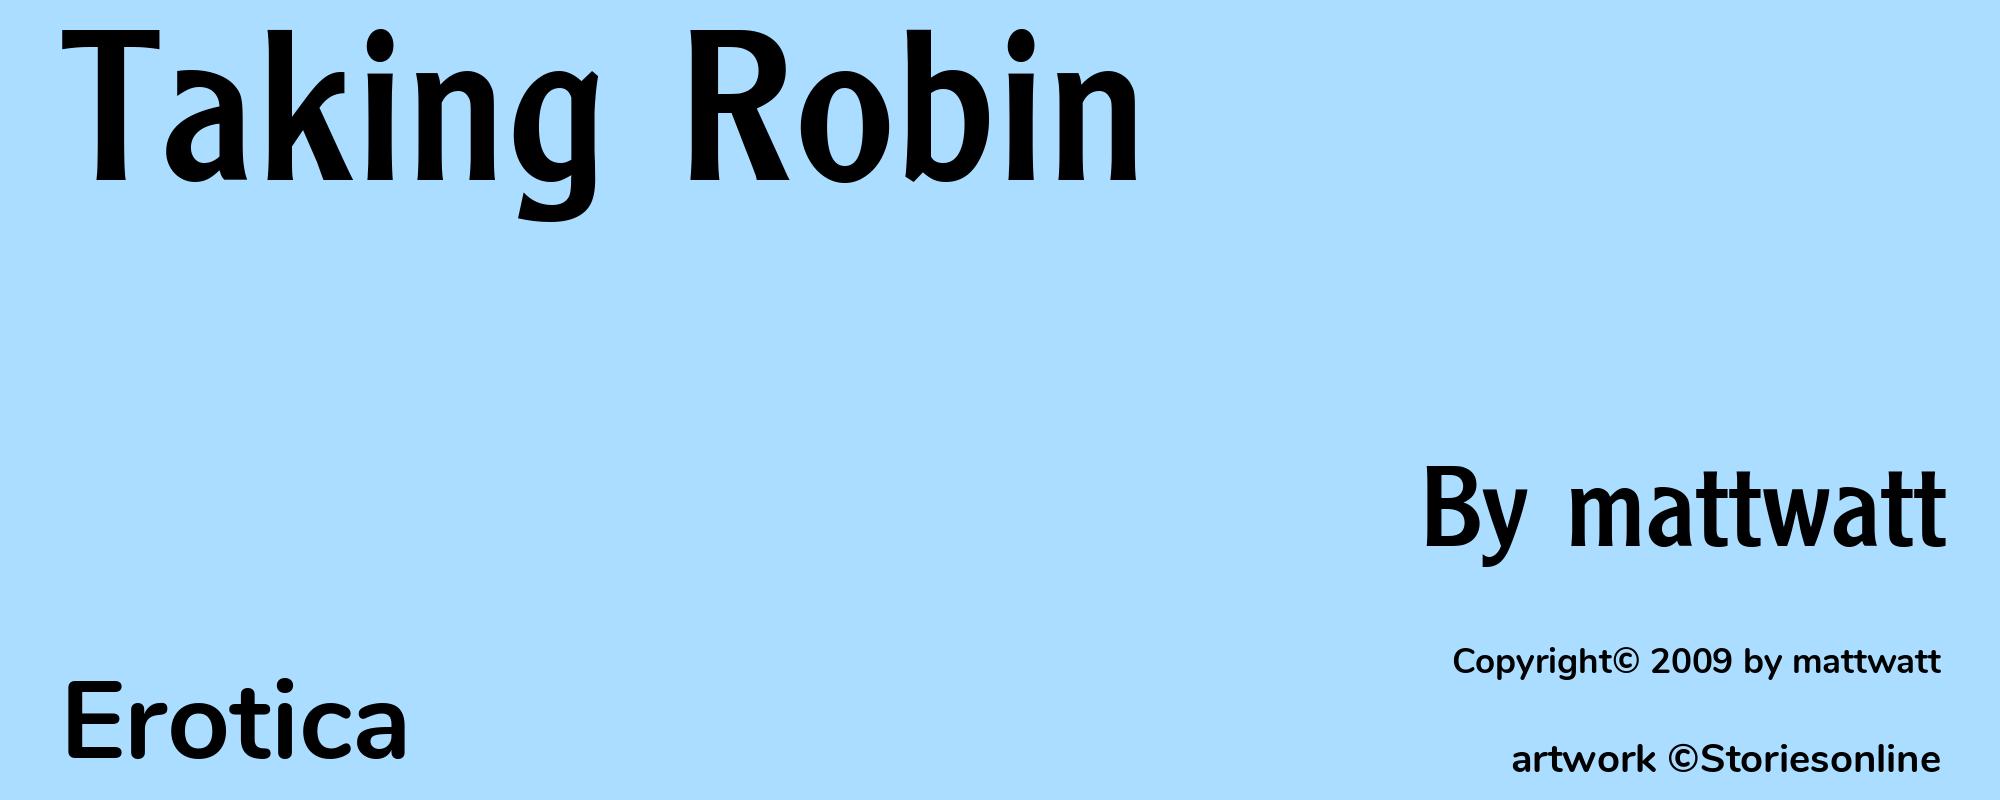 Taking Robin - Cover